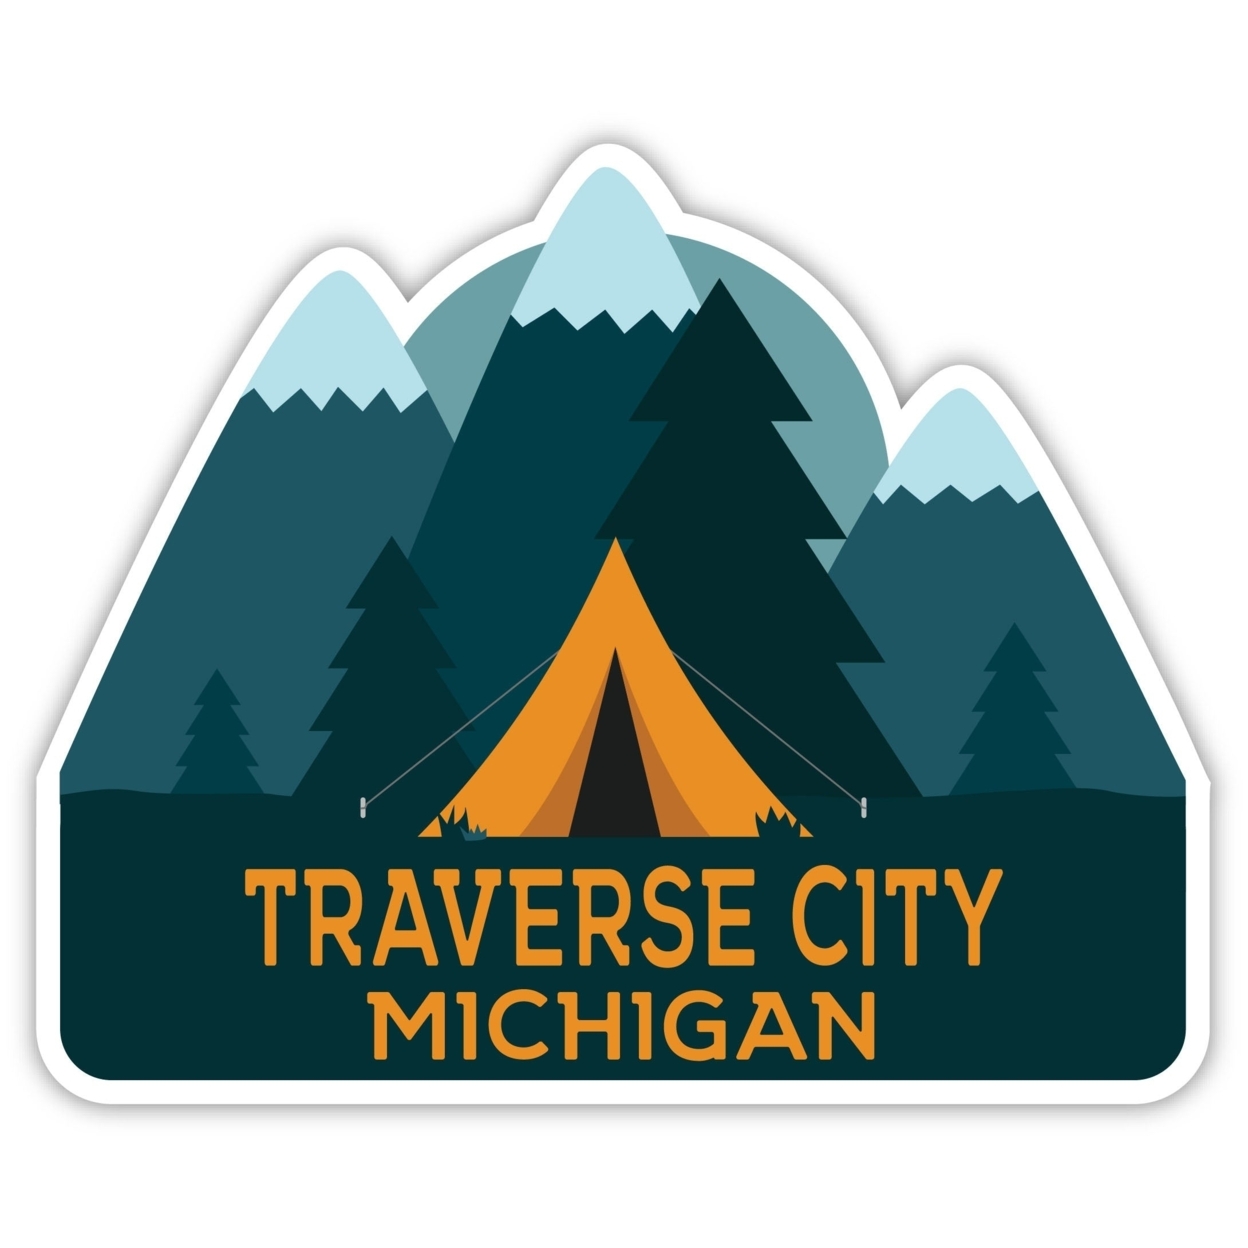 Traverse City Michigan Souvenir Decorative Stickers (Choose Theme And Size) - Single Unit, 2-Inch, Adventures Awaits